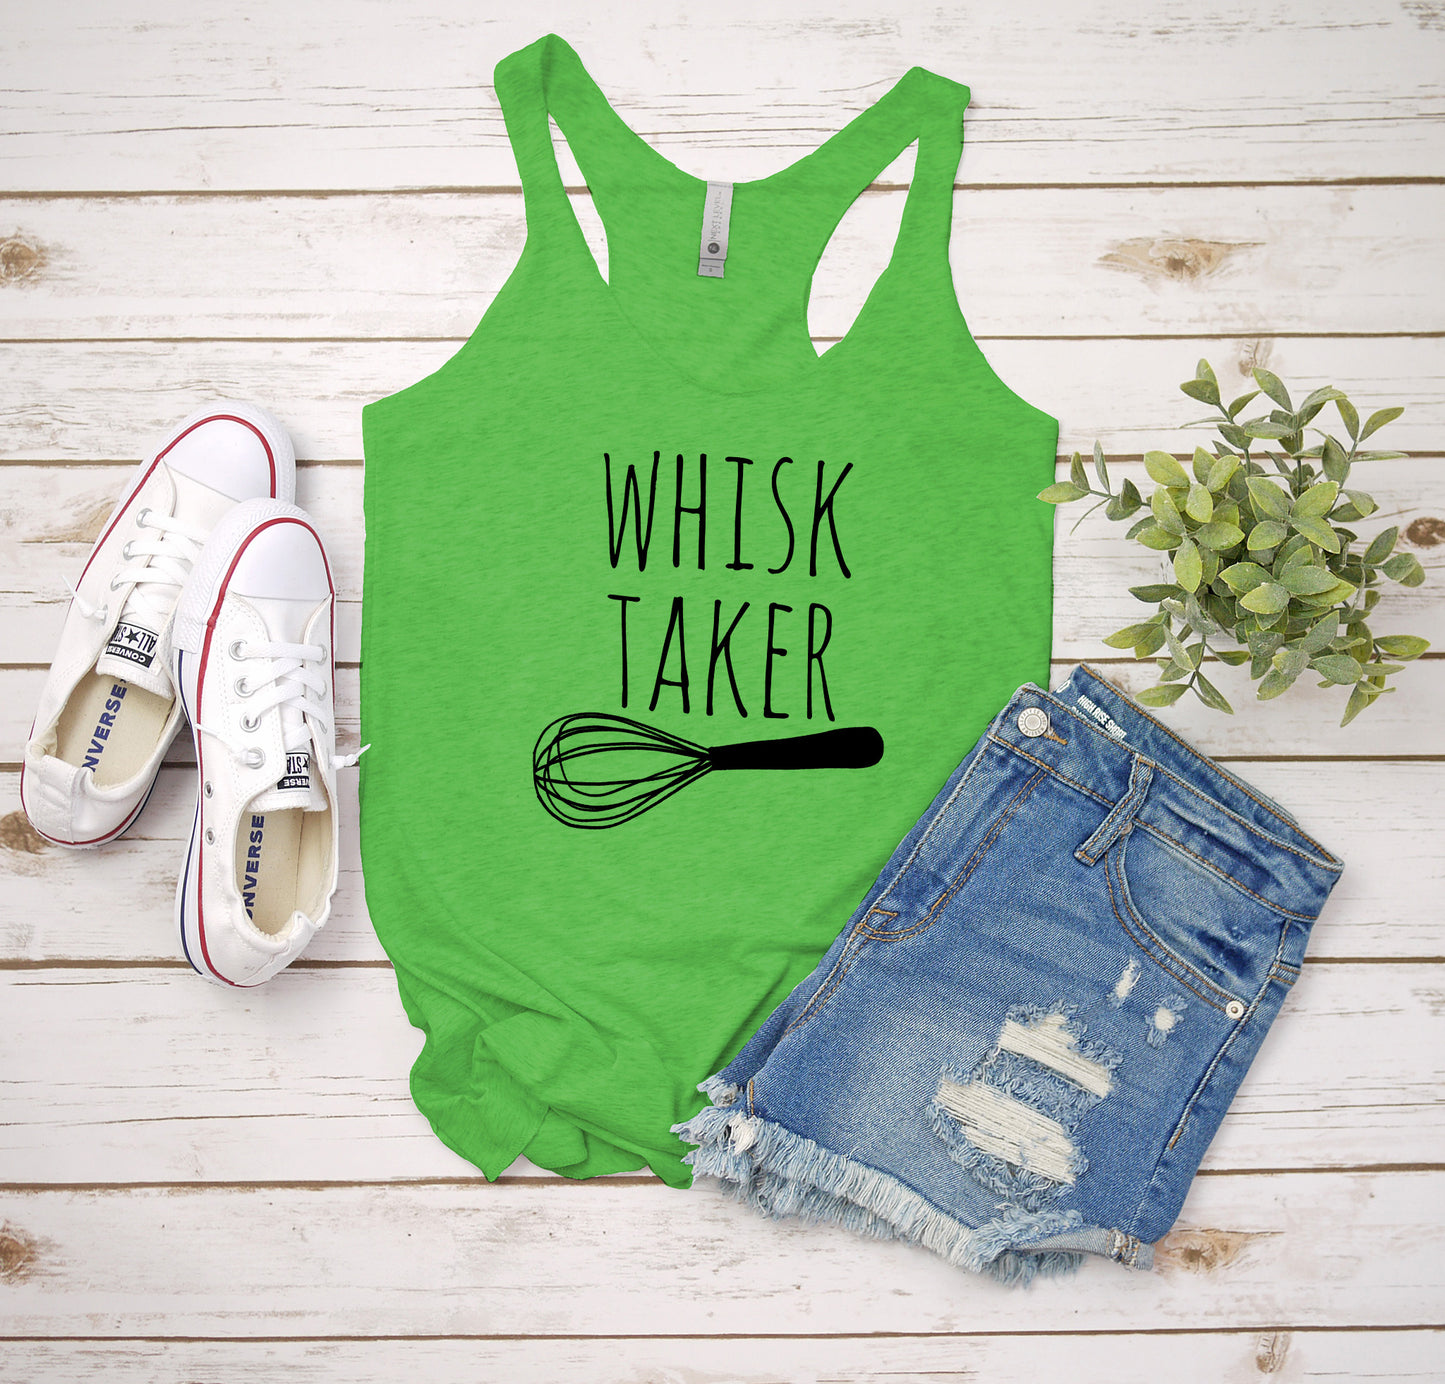 Whisk Taker (Baking) - Women's Tank - Heather Gray, Tahiti, or Envy